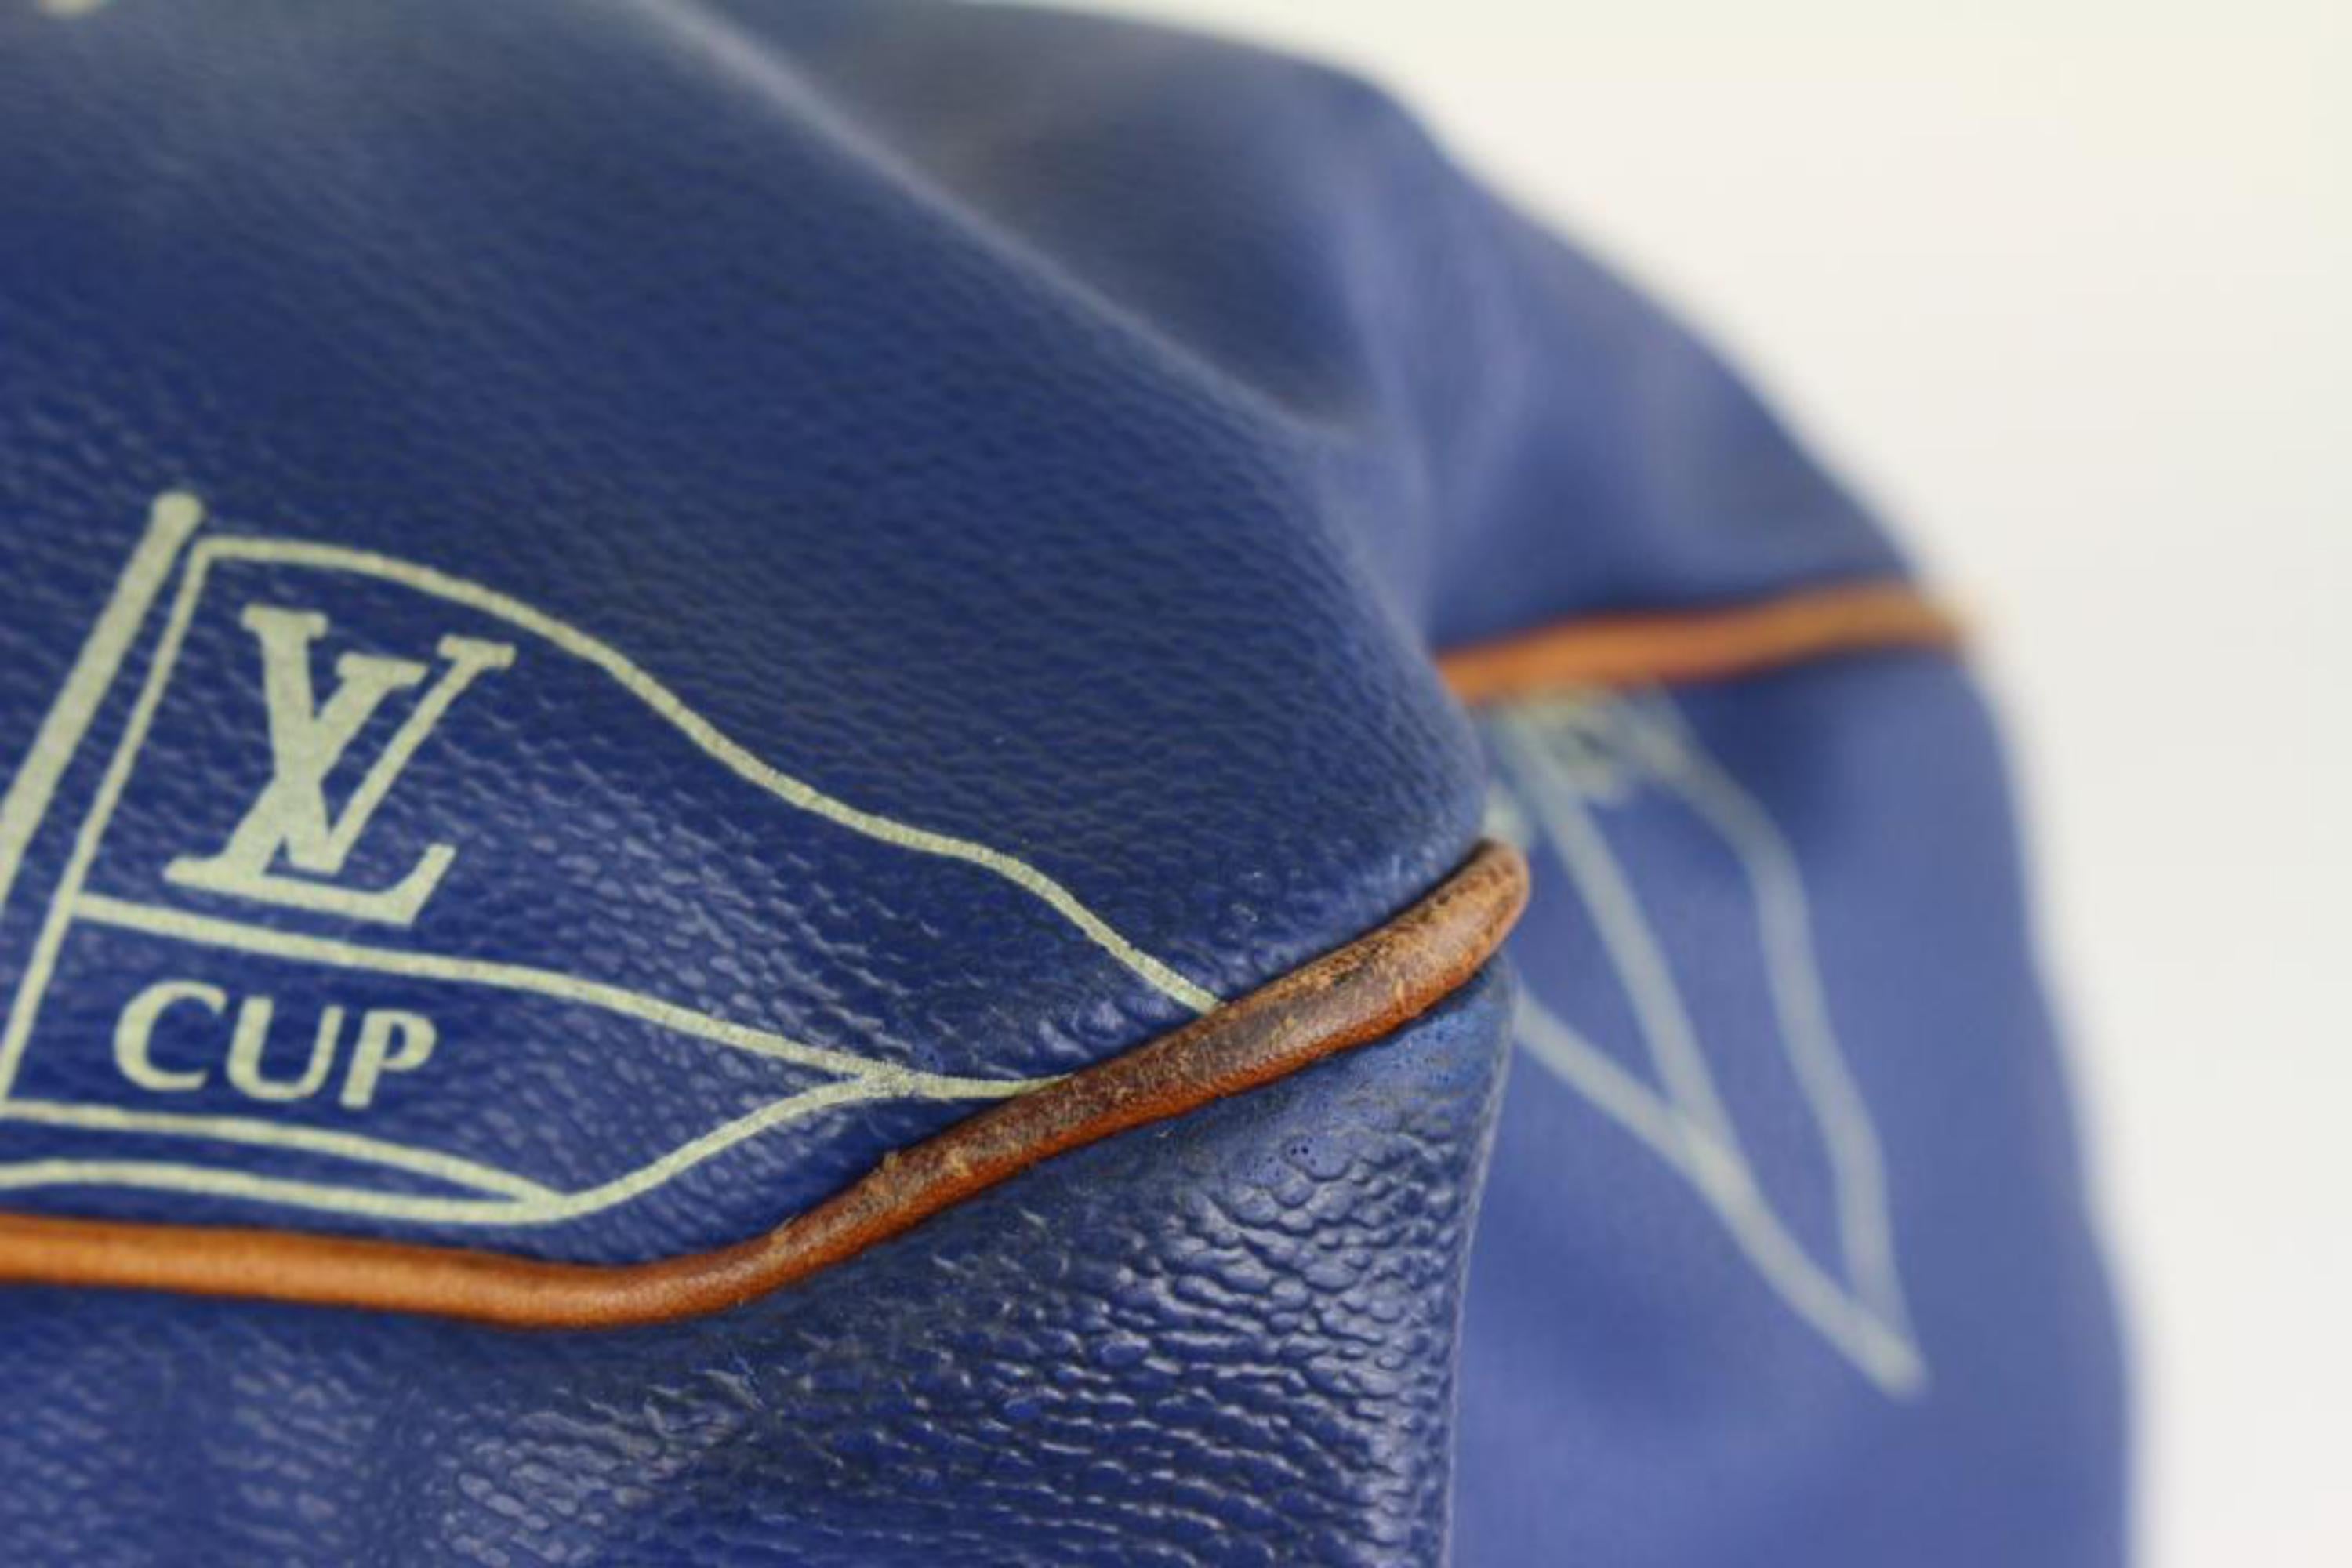 Louis Vuitton Blue LV Cup Sac Plein Air Long Keepall Bag 1015lv43 In Fair Condition For Sale In Dix hills, NY